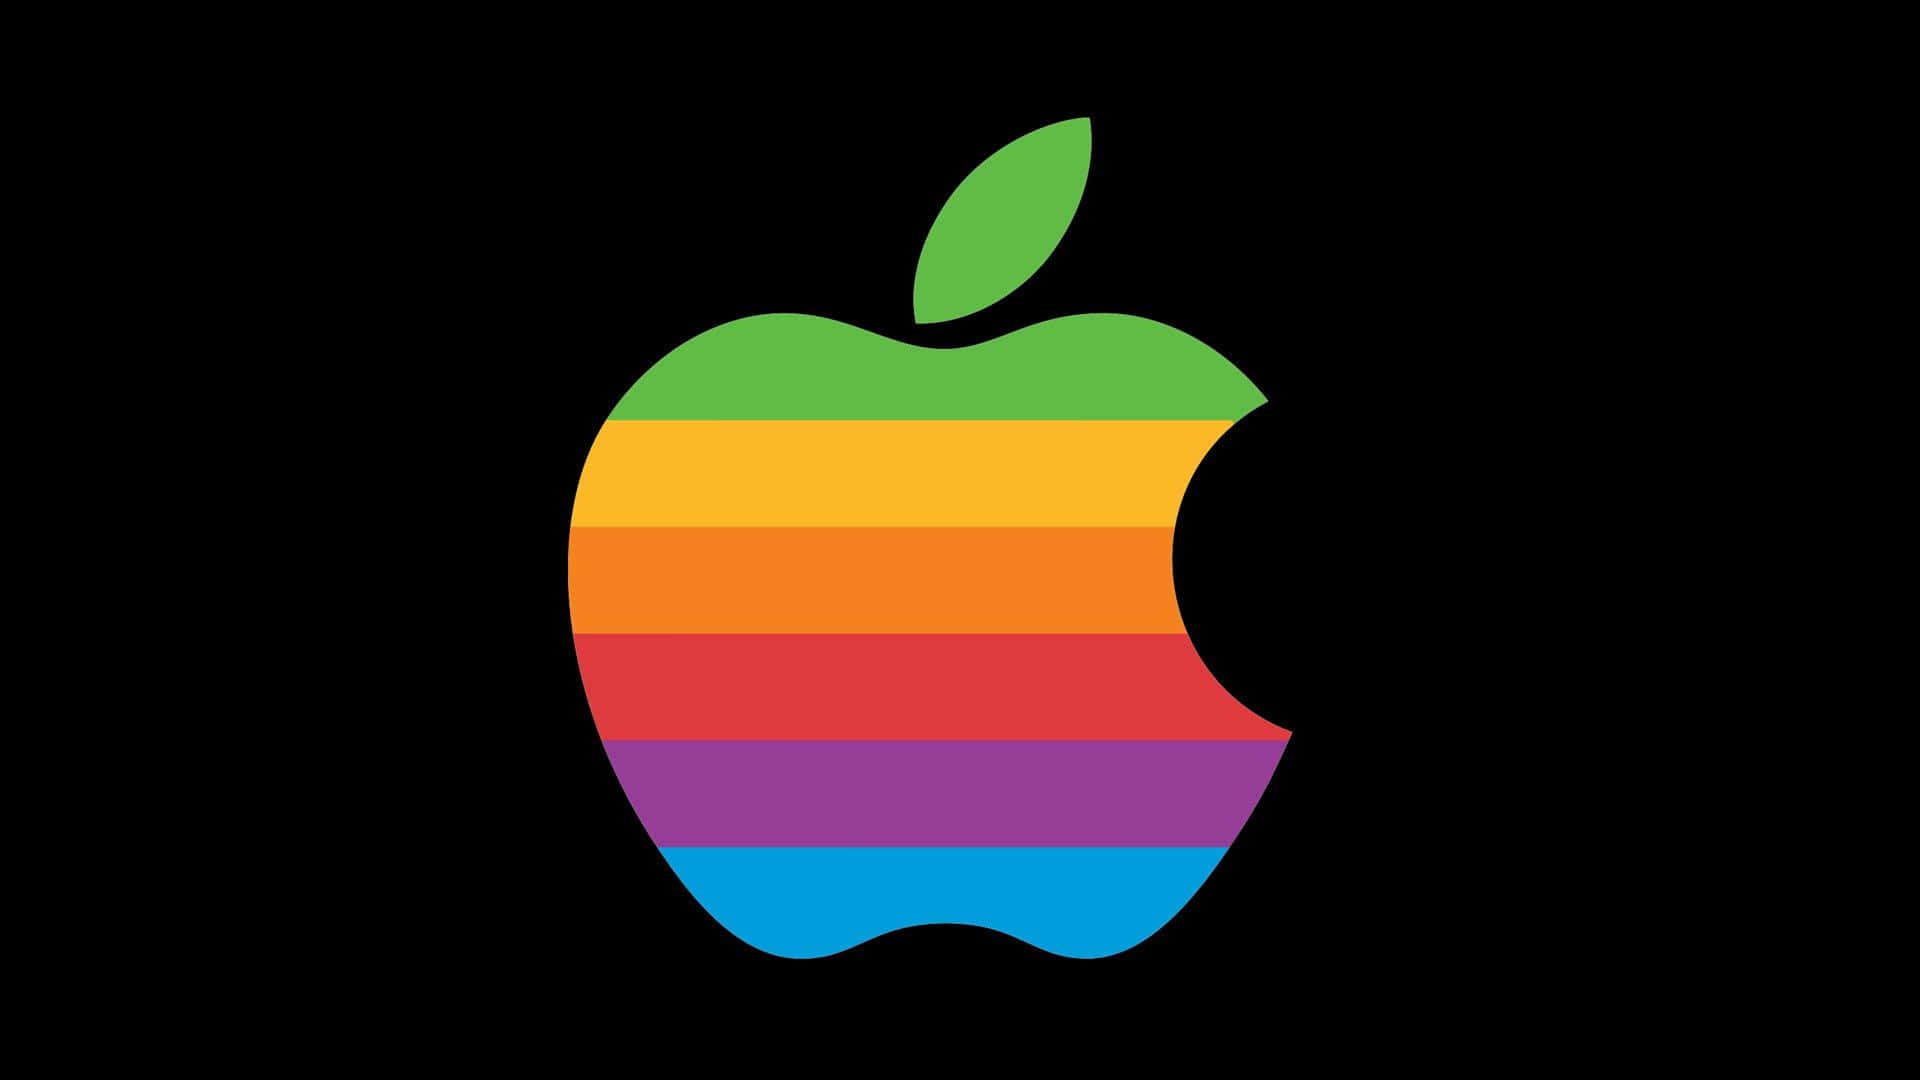 A nostalgic look at the classic Apple logo. Wallpaper